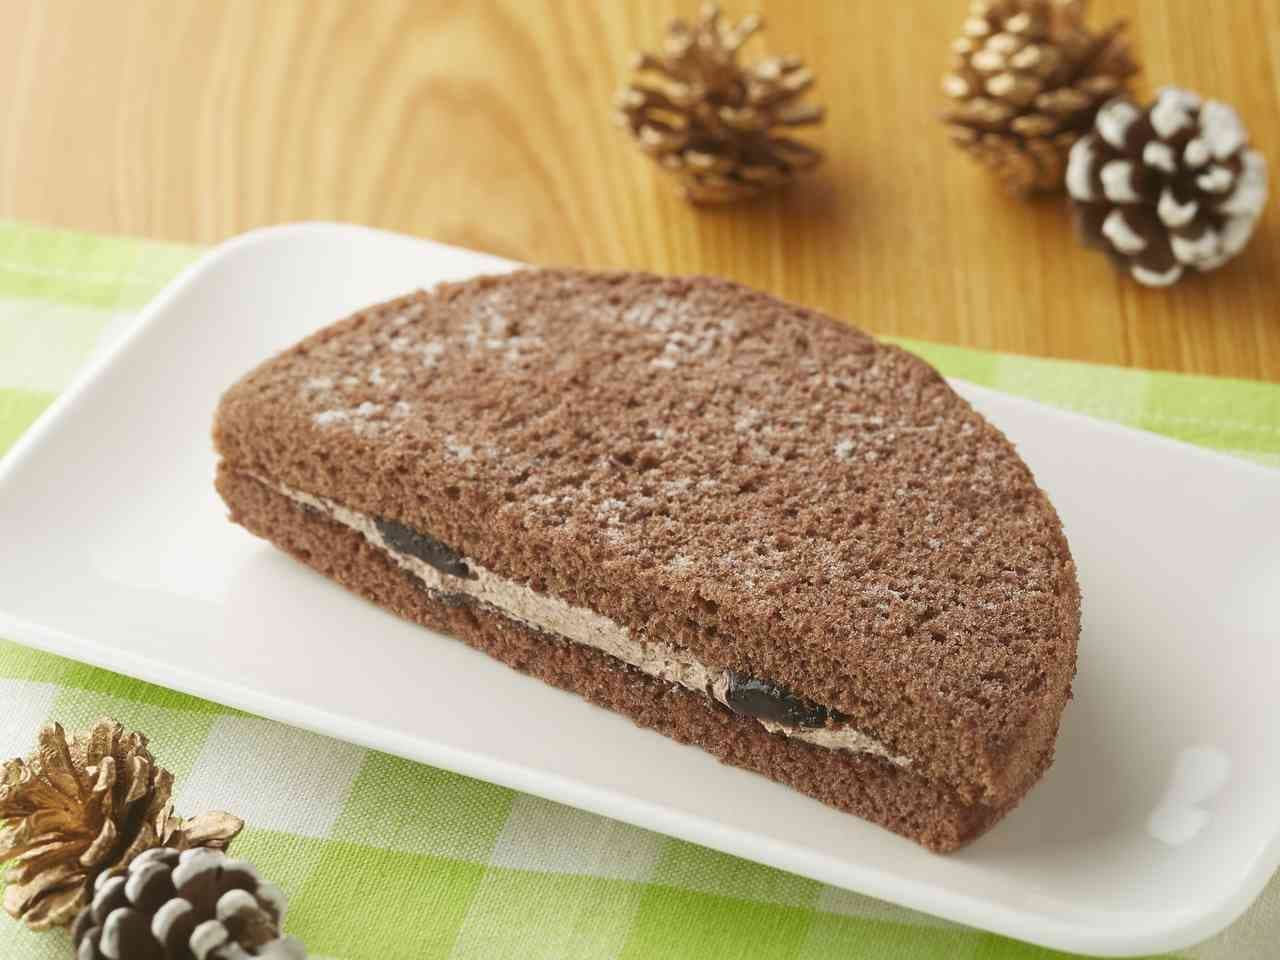 Ministop: Christmas cake-inspired sweet bread